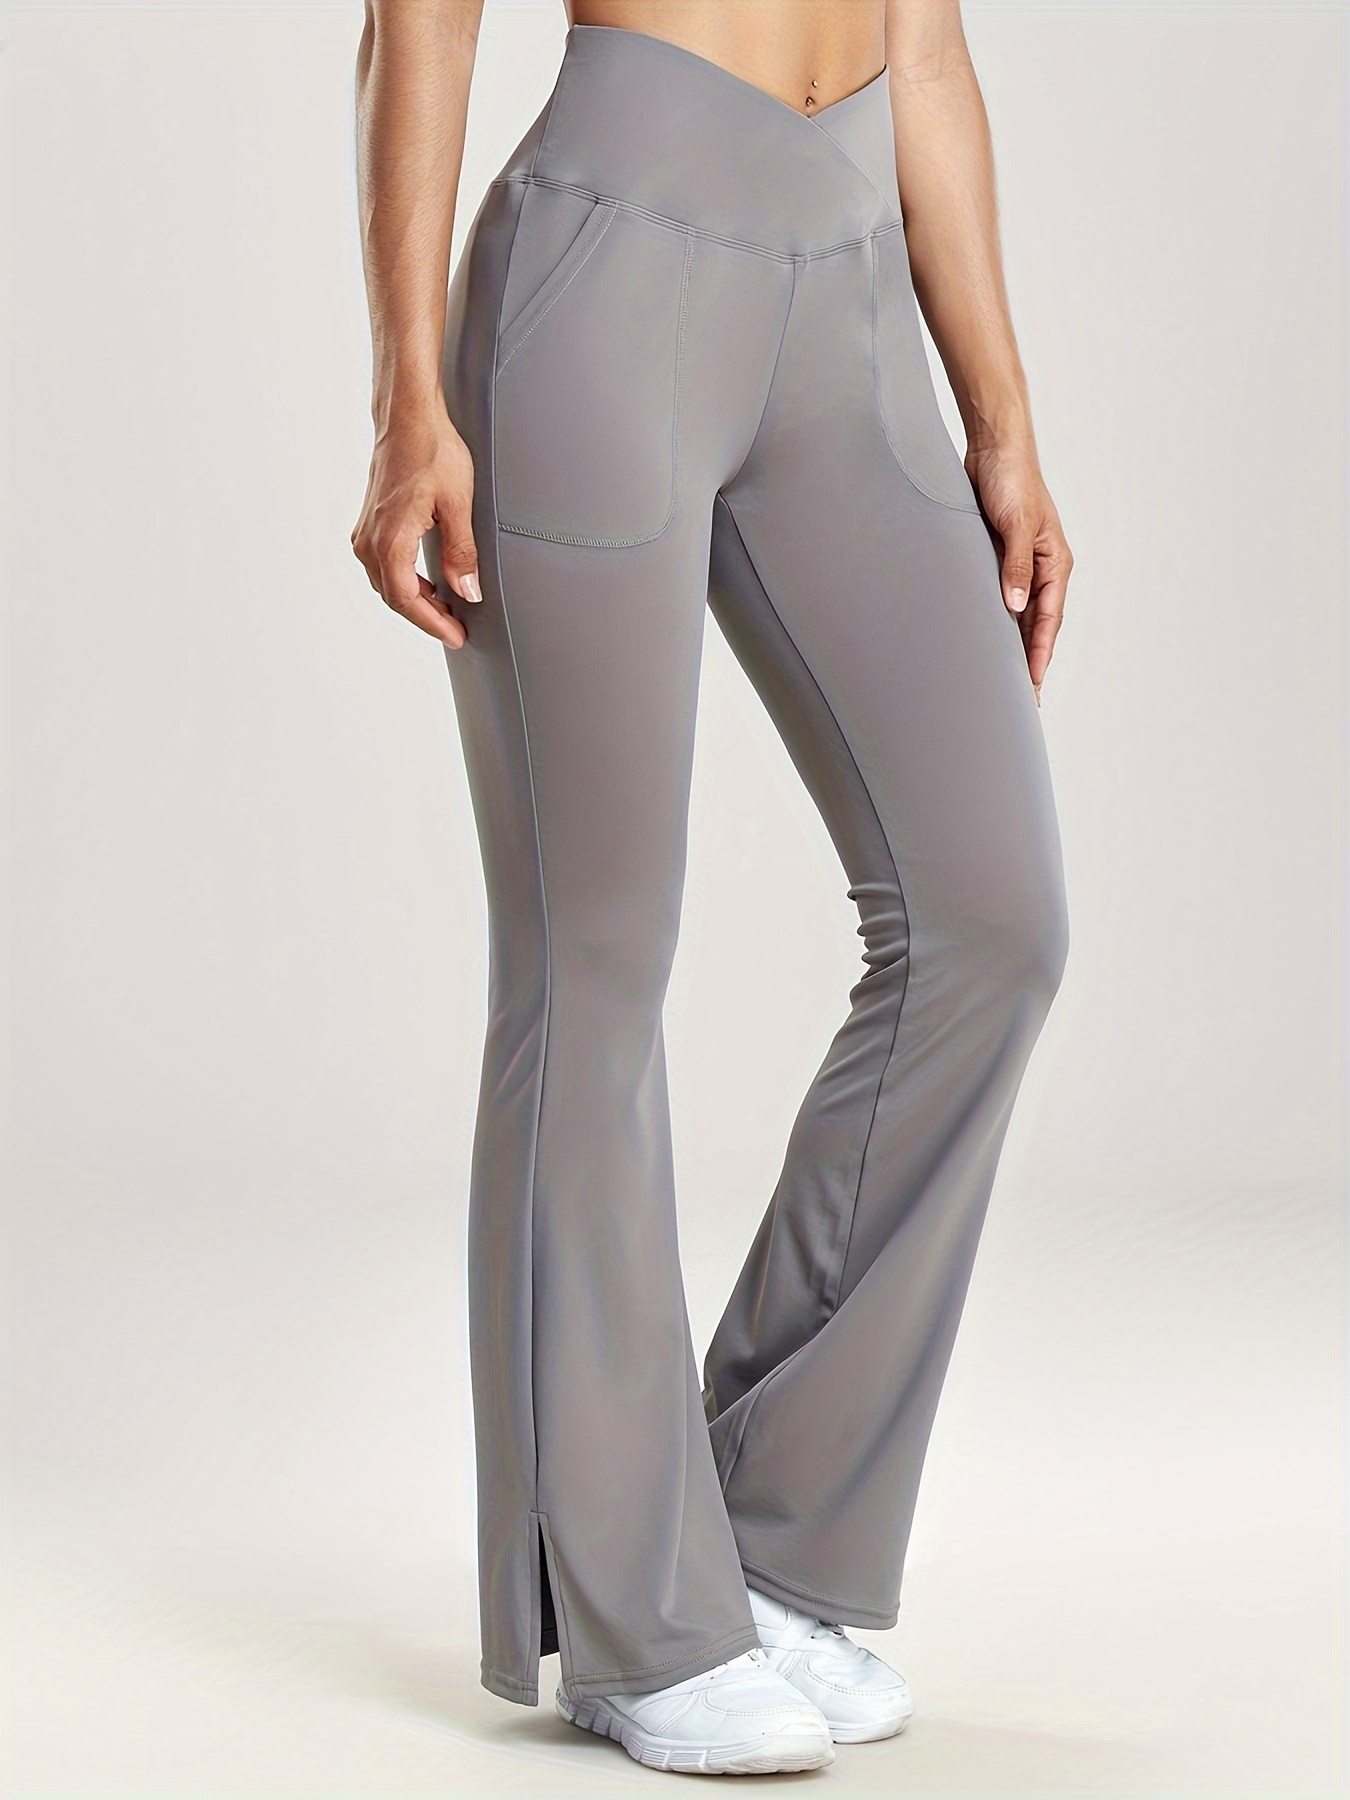 V WAIST FLARED YOGA PANTS WITH POCKETS - Olive / L  Flared yoga pants, Yoga  pants with pockets, Flare leggings